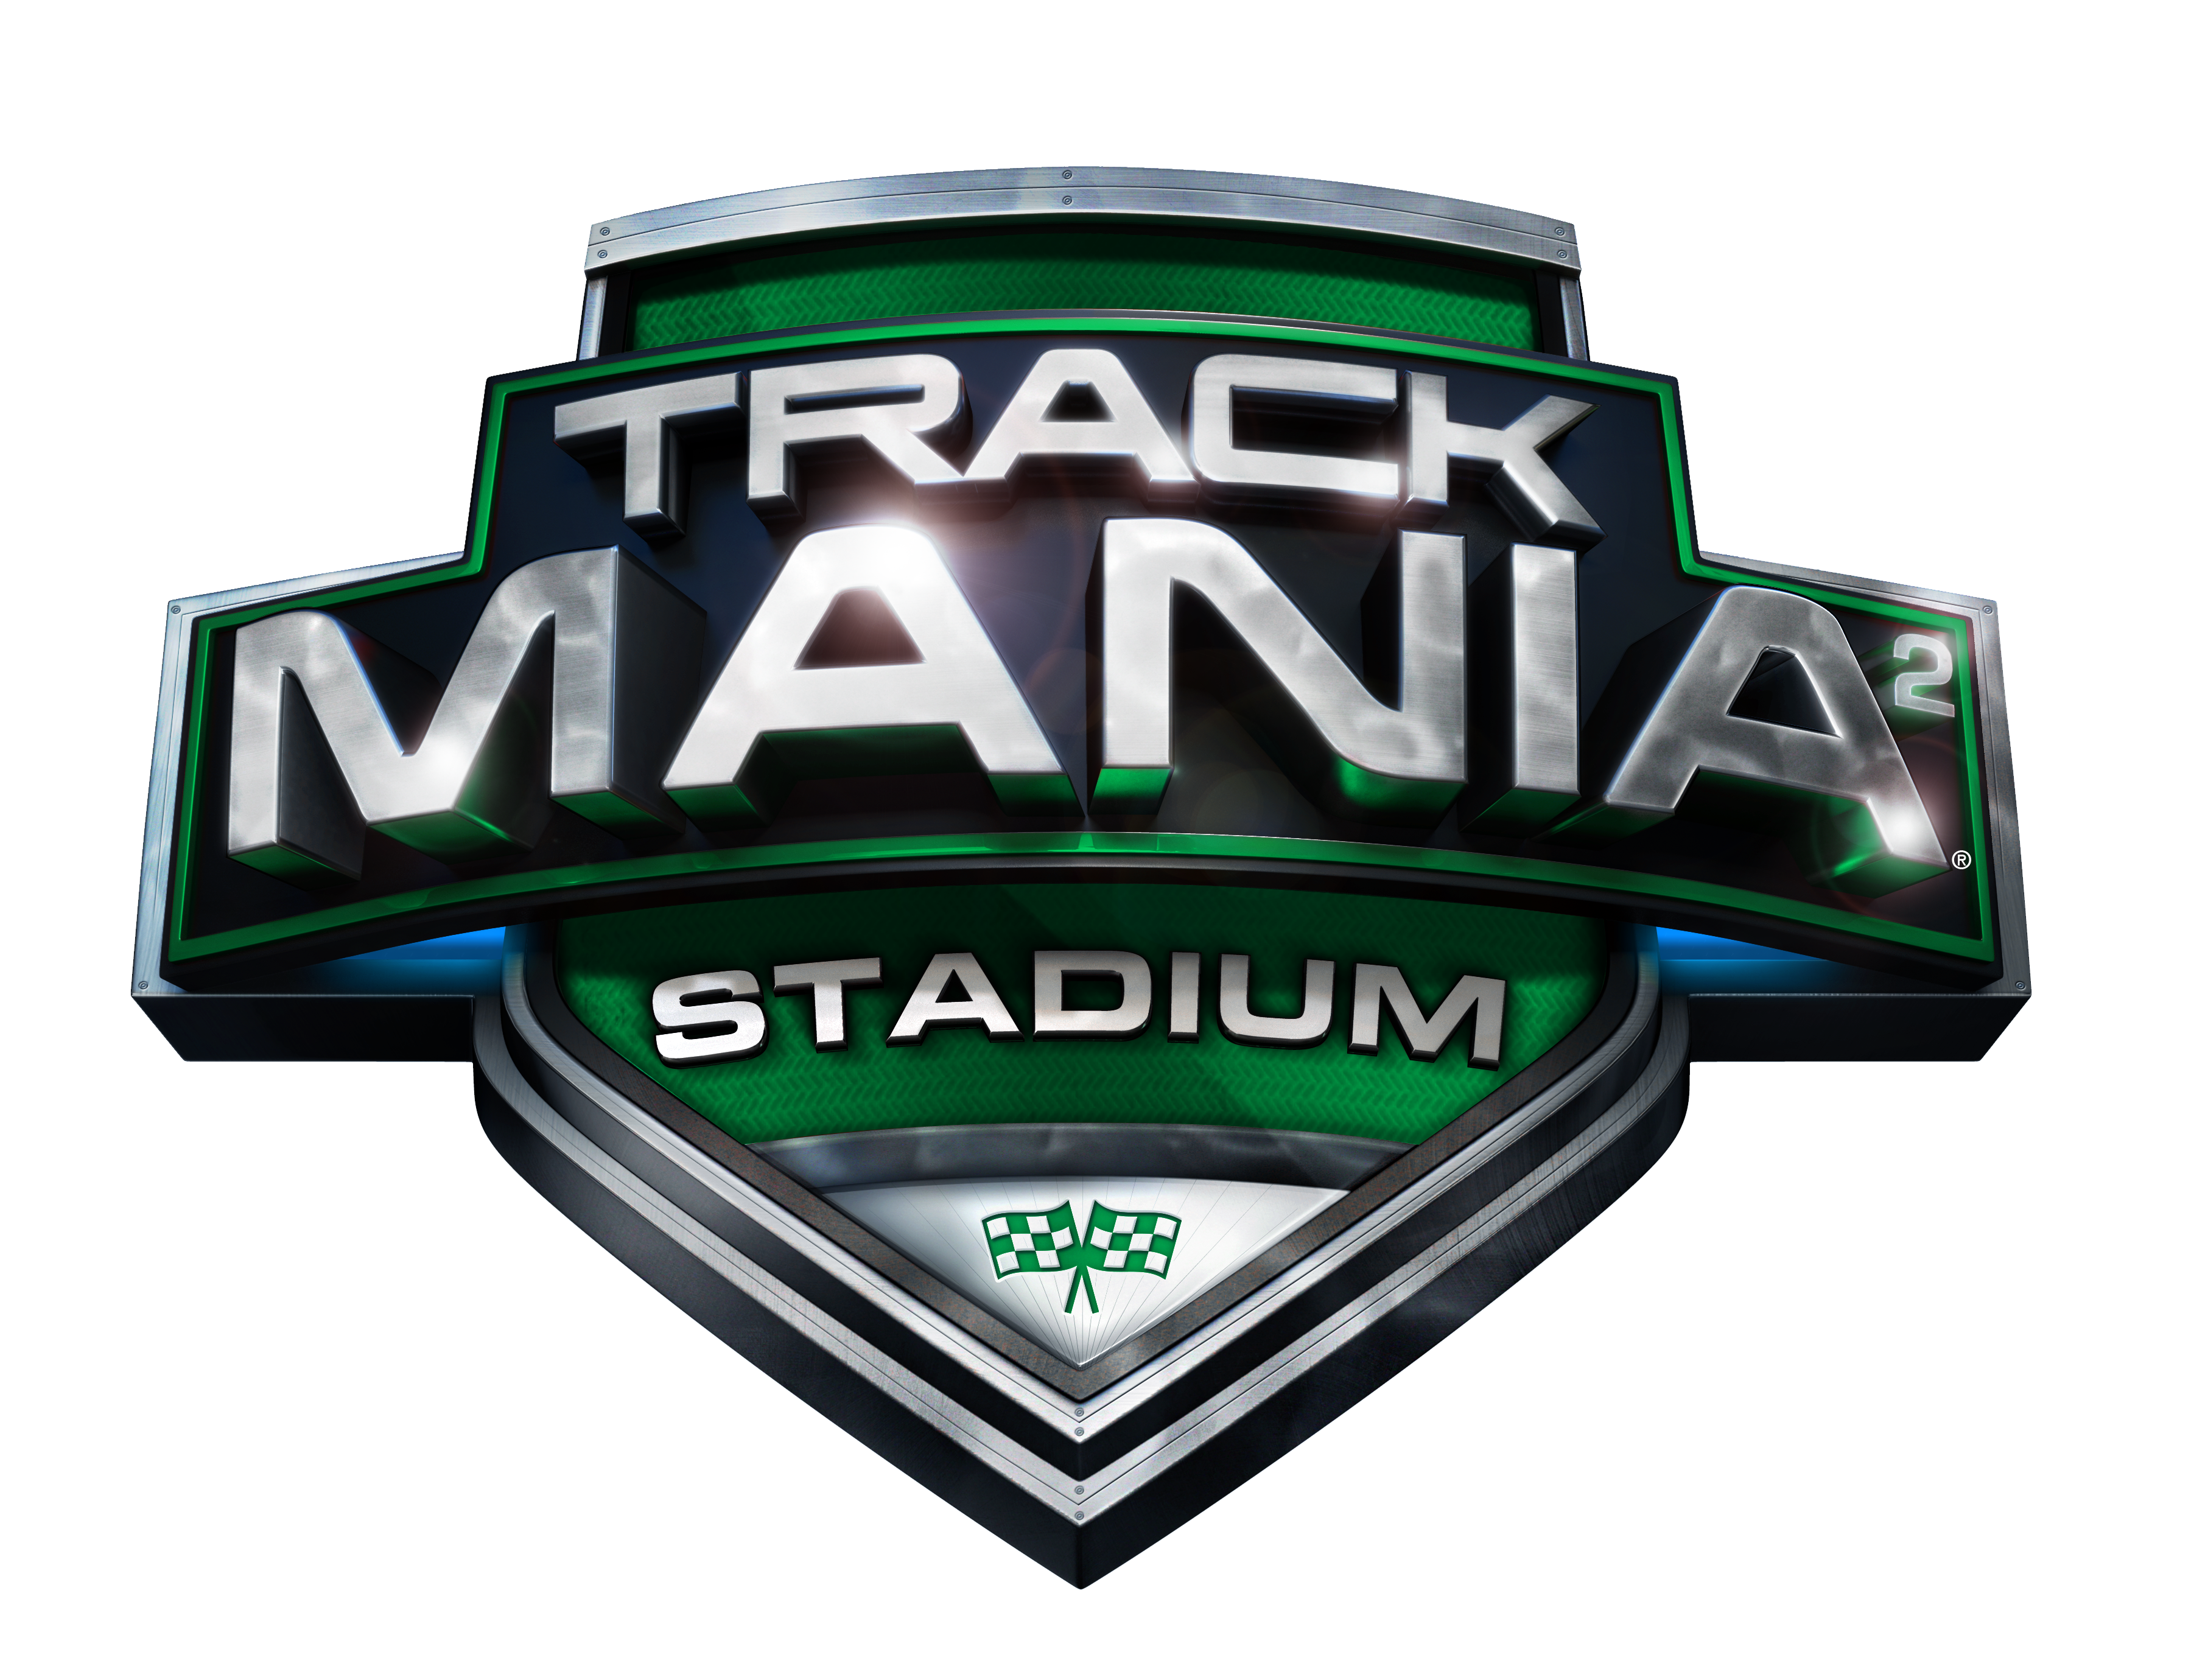 trackmania 2 stadium cheat table